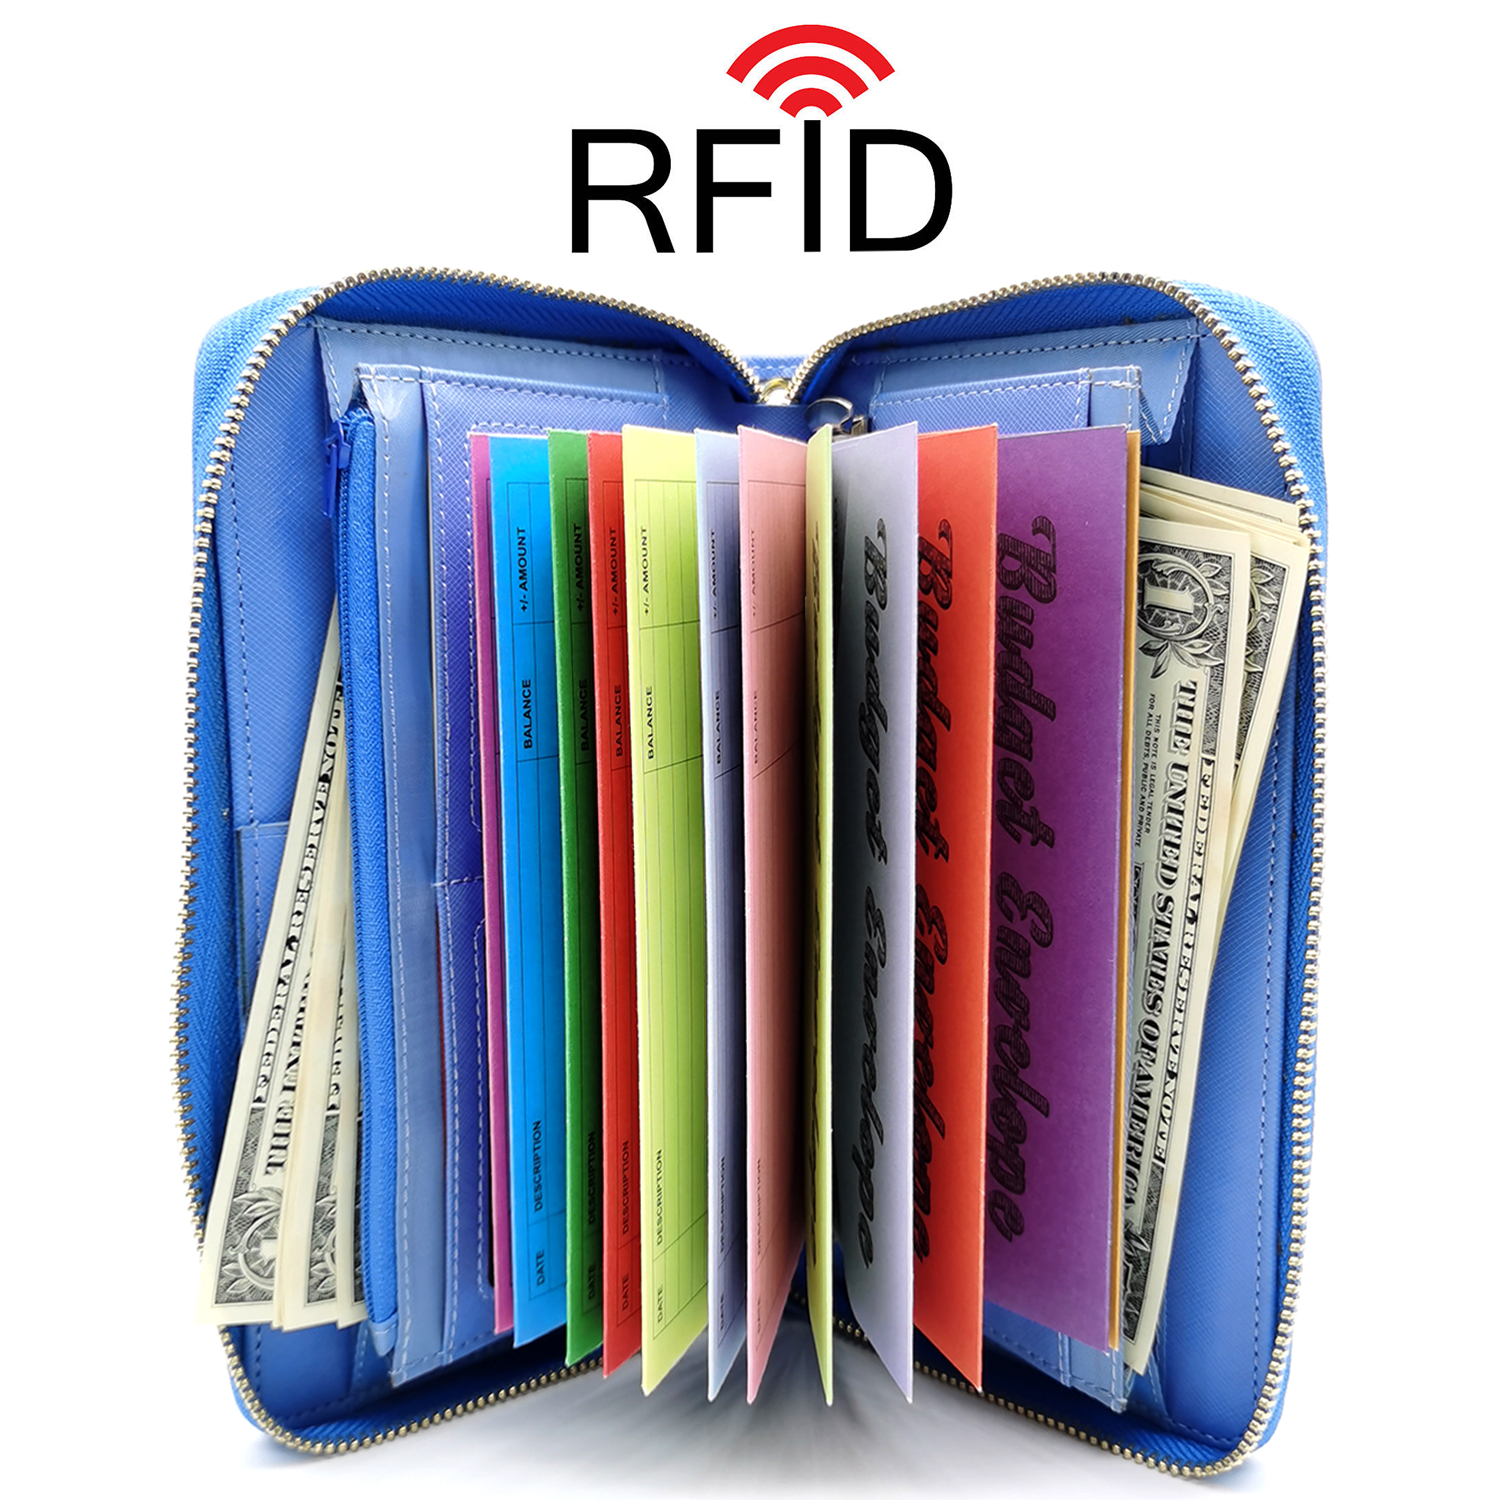 Cash Envelopes Wallet - RFID Blocking - Finances Organizer Calendar Budget Planner Notebook with 2023 Weekly & Monthly Planner Refill & 12 Budget